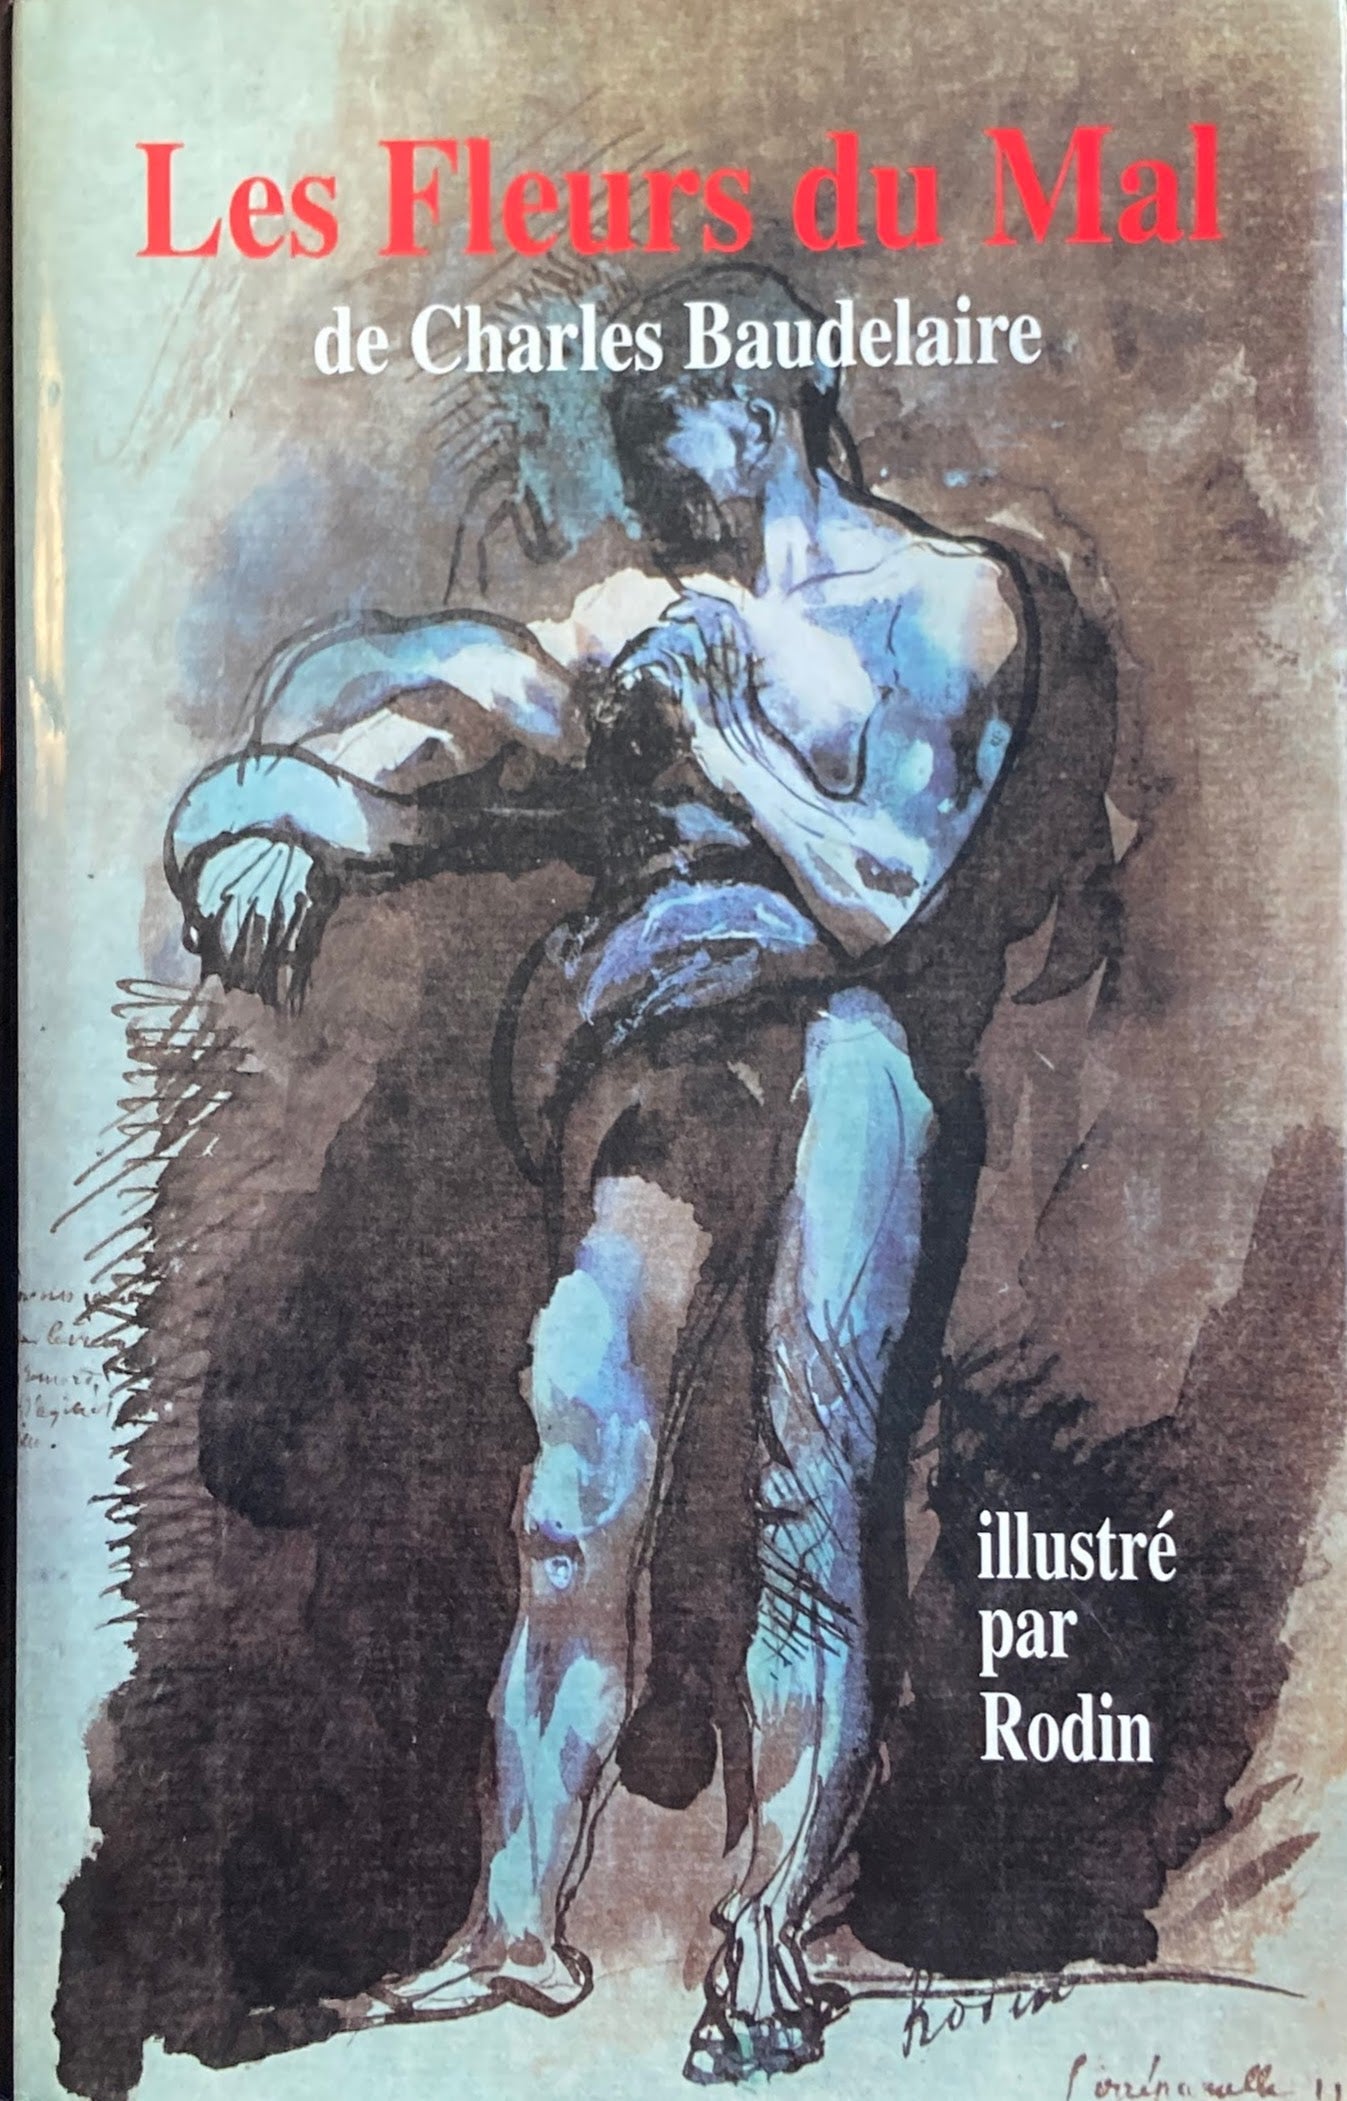 Les Fleurs du Mal de Charles Baudelaire　illustre par Rodin　ボードレール　ロダン